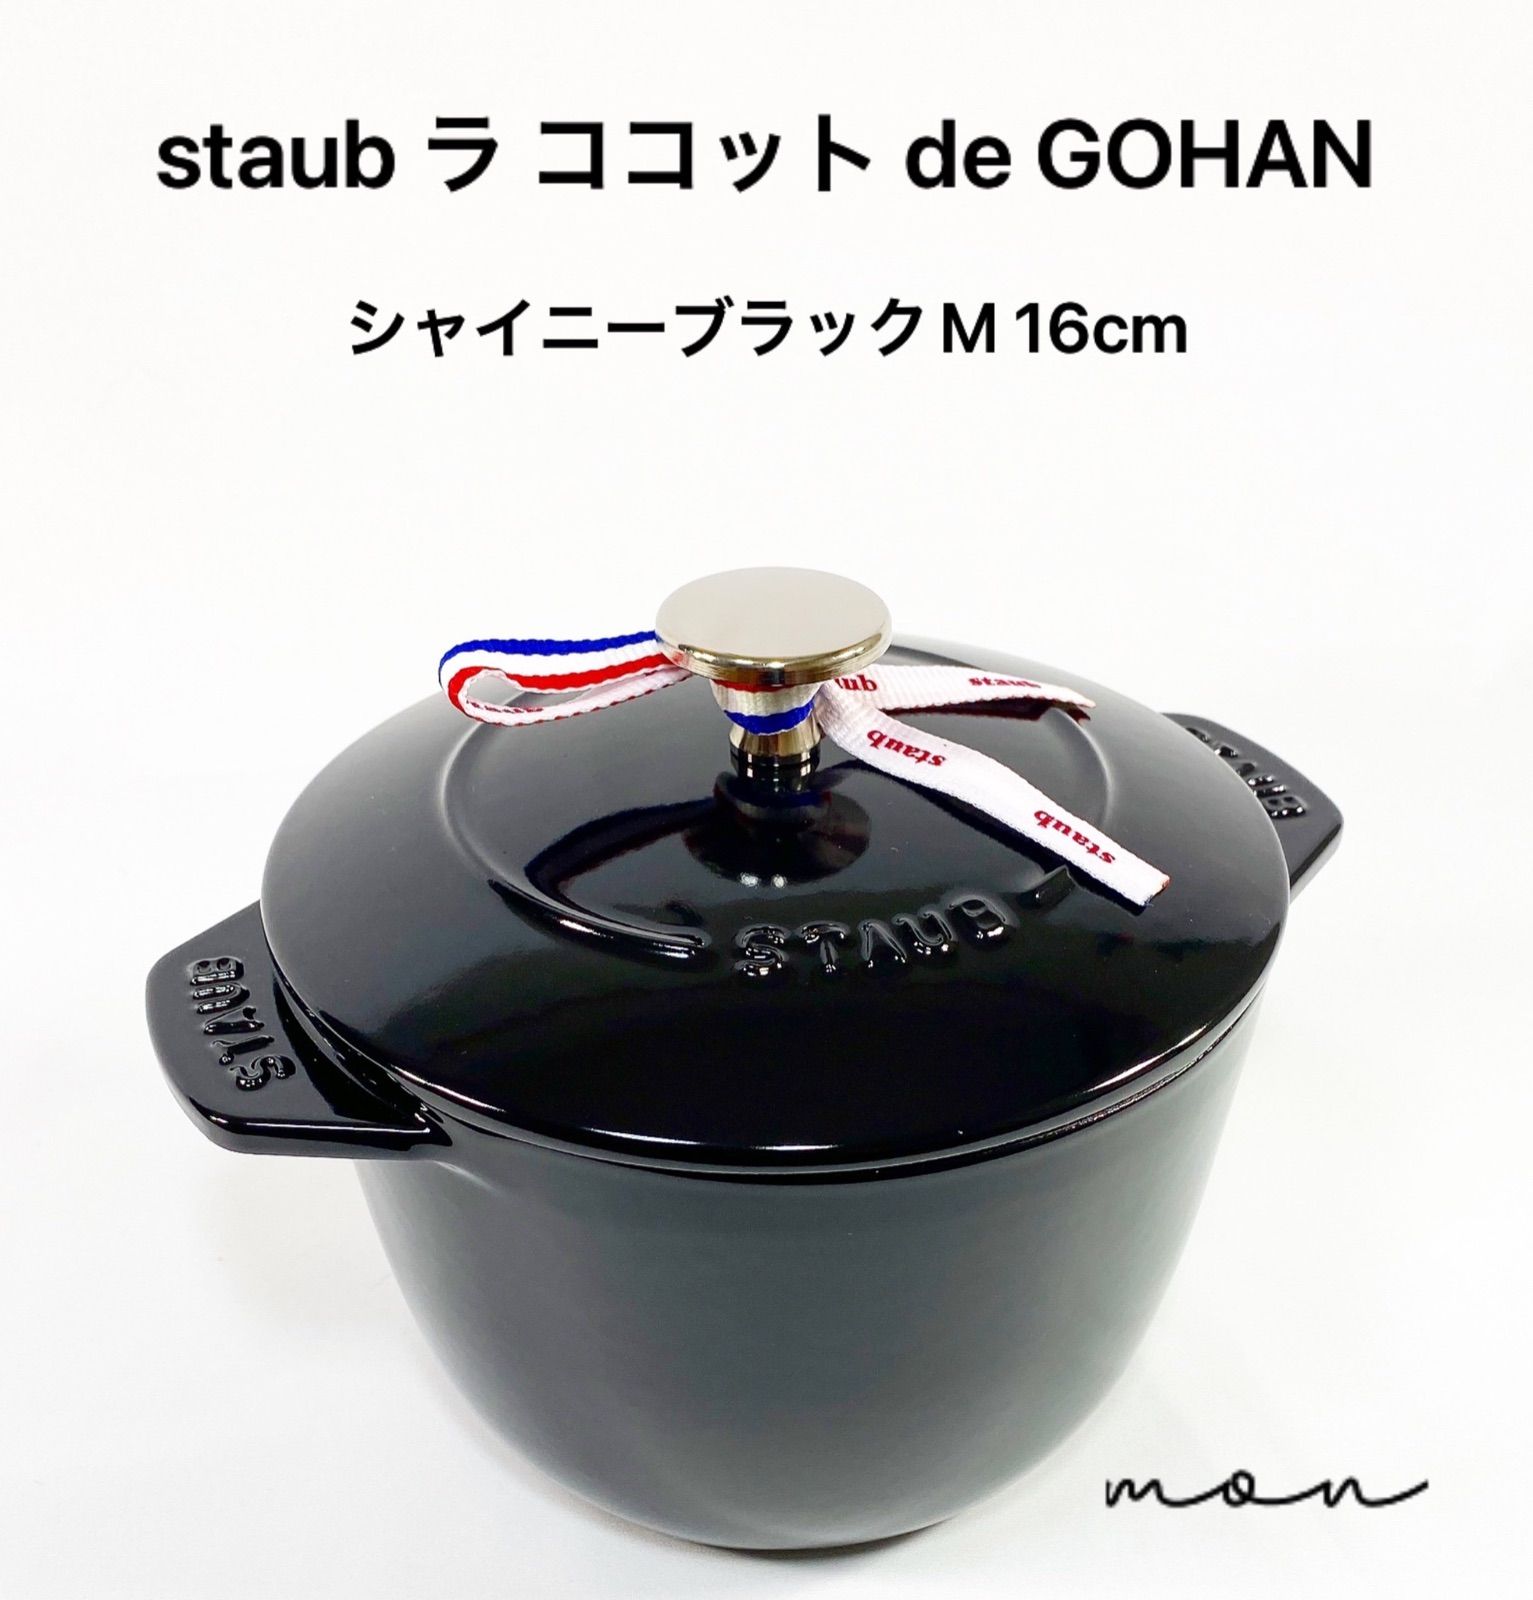 staub ラ ココット de GOHAN シャイニーブラックM 16cm - メルカリ